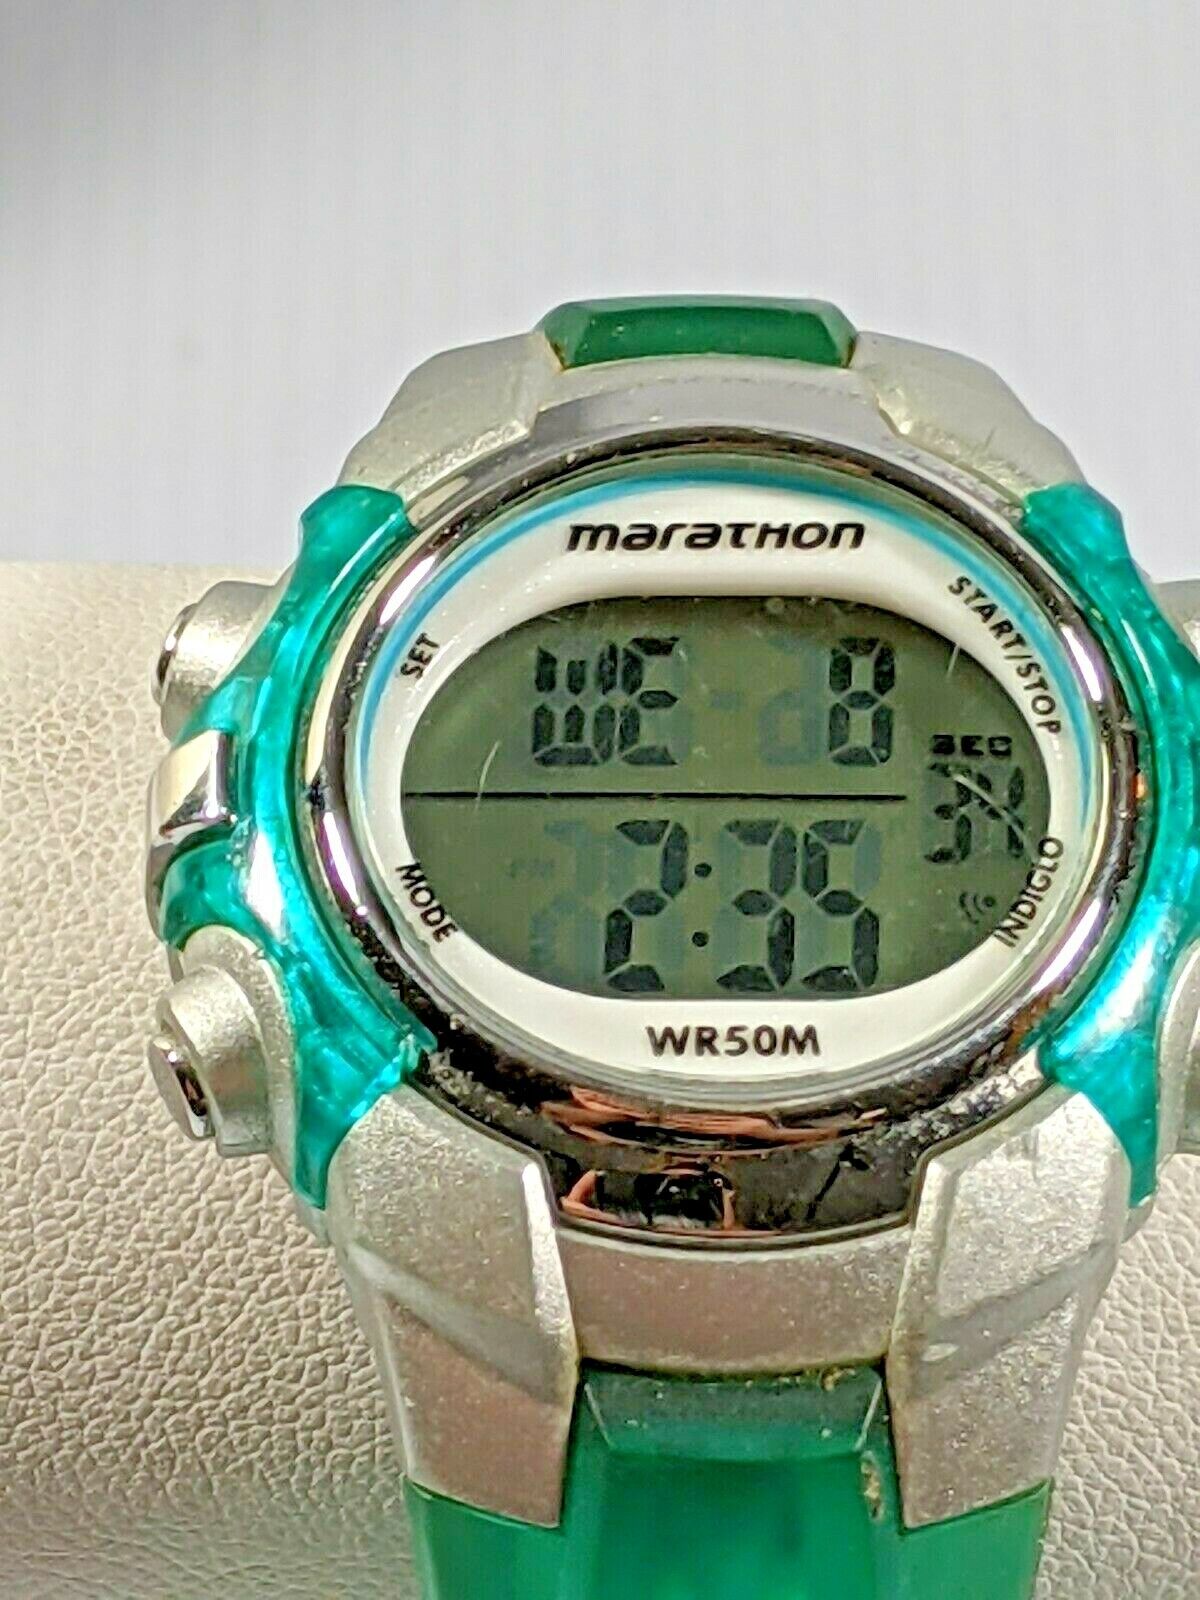 Marathon Day Date Time Digital Green Resin Band Watch WR 50 M 9 Inch